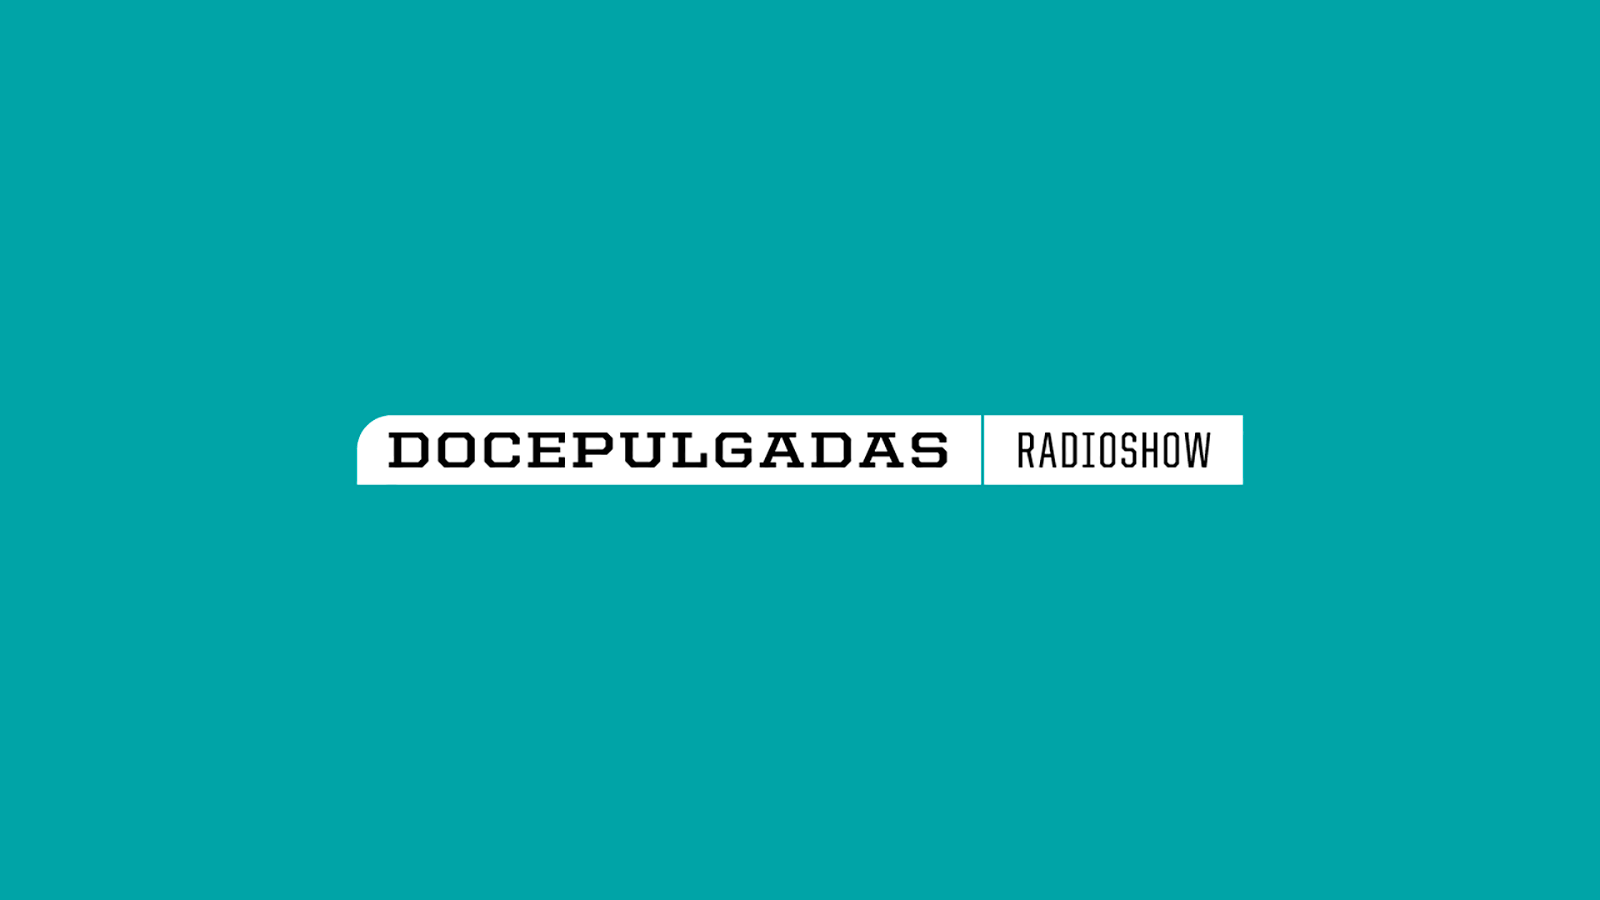 DocePulgadas RadioShow 02